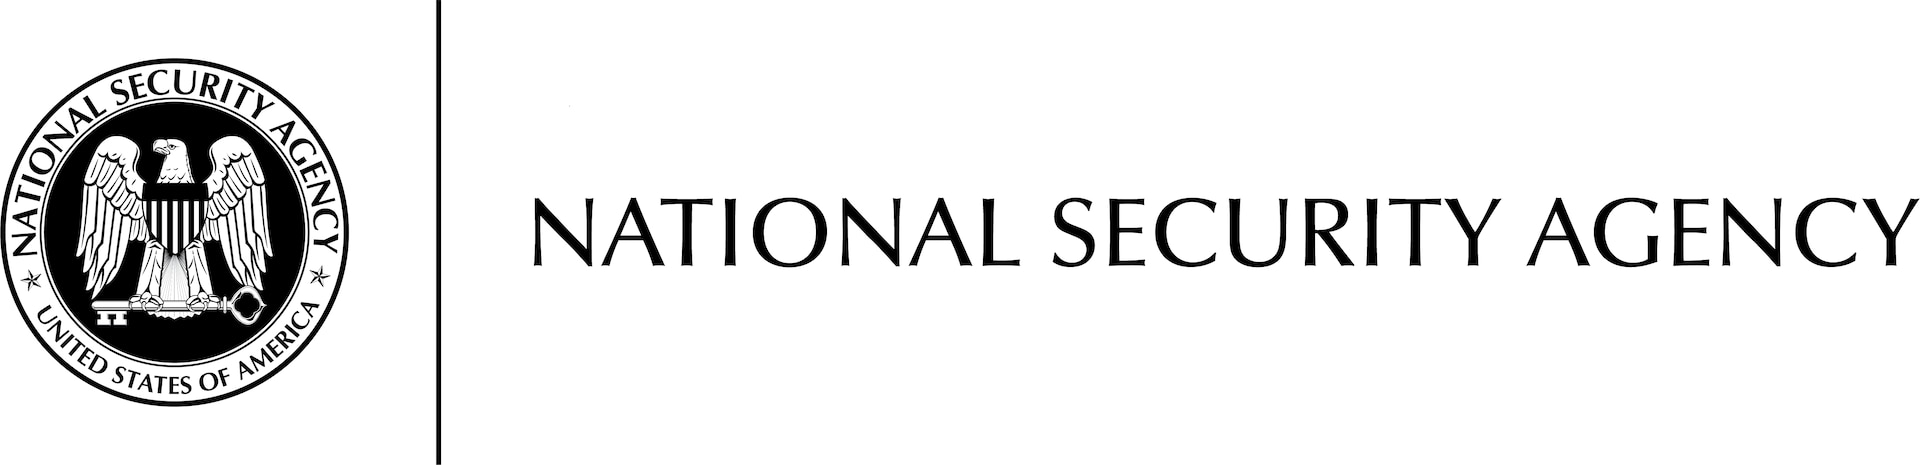 NSA Seal Wordmark